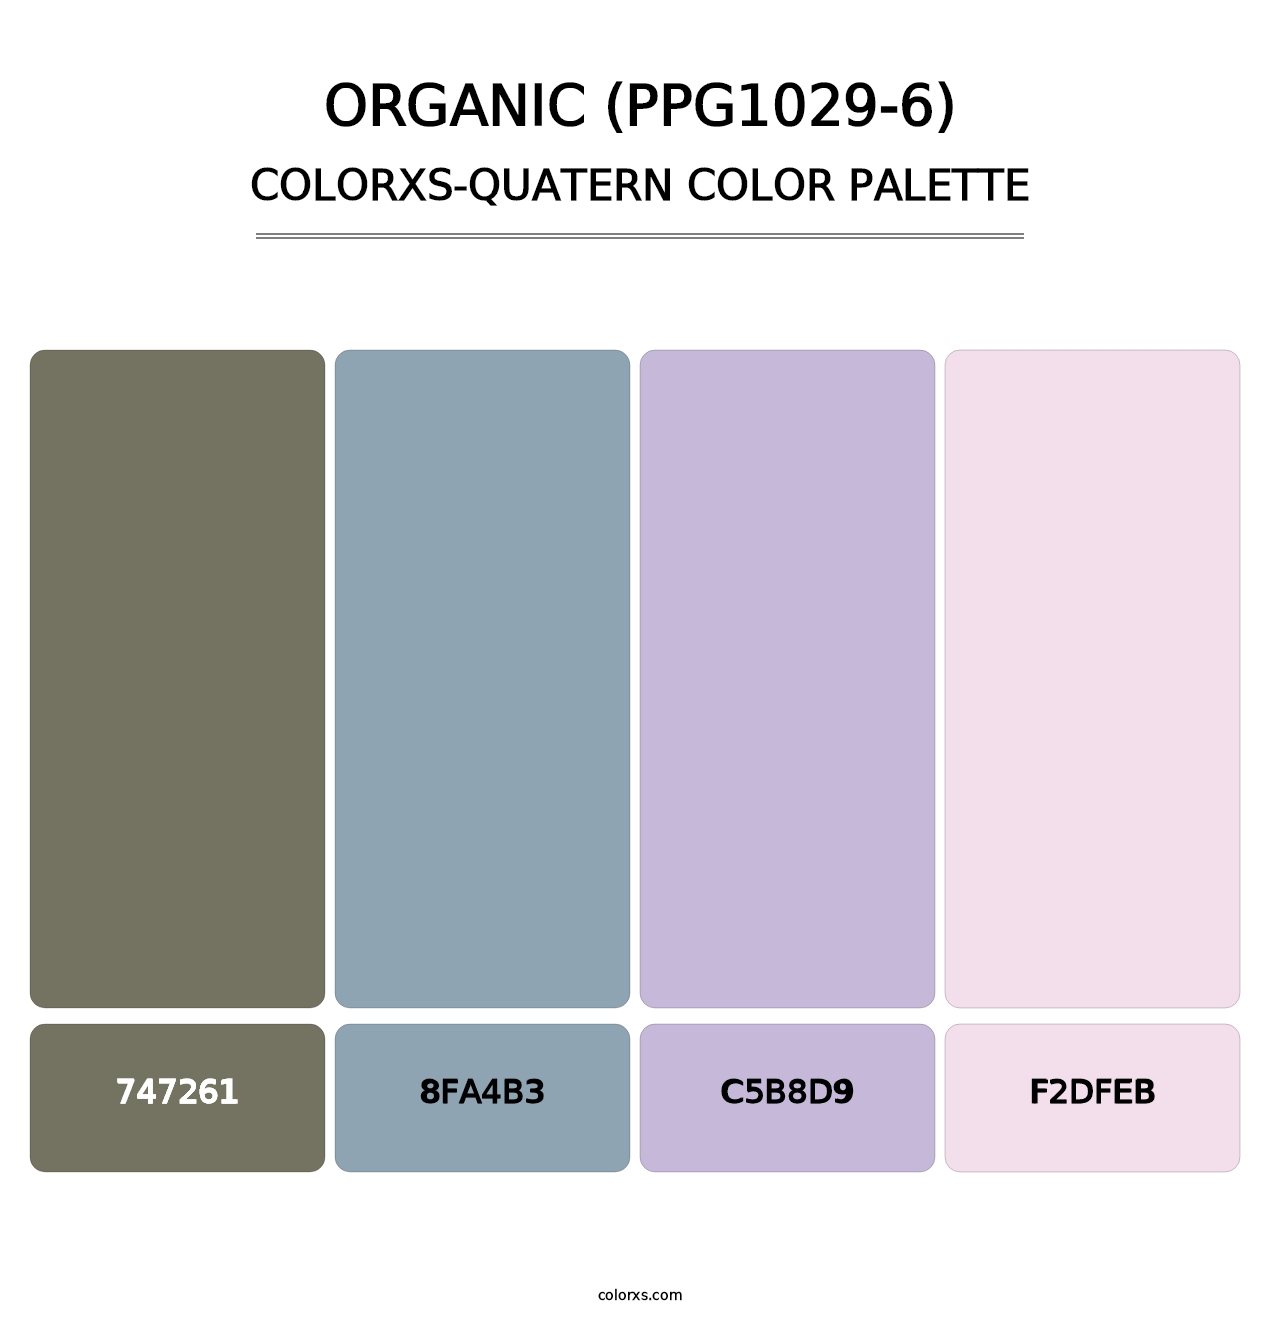 Organic (PPG1029-6) - Colorxs Quatern Palette